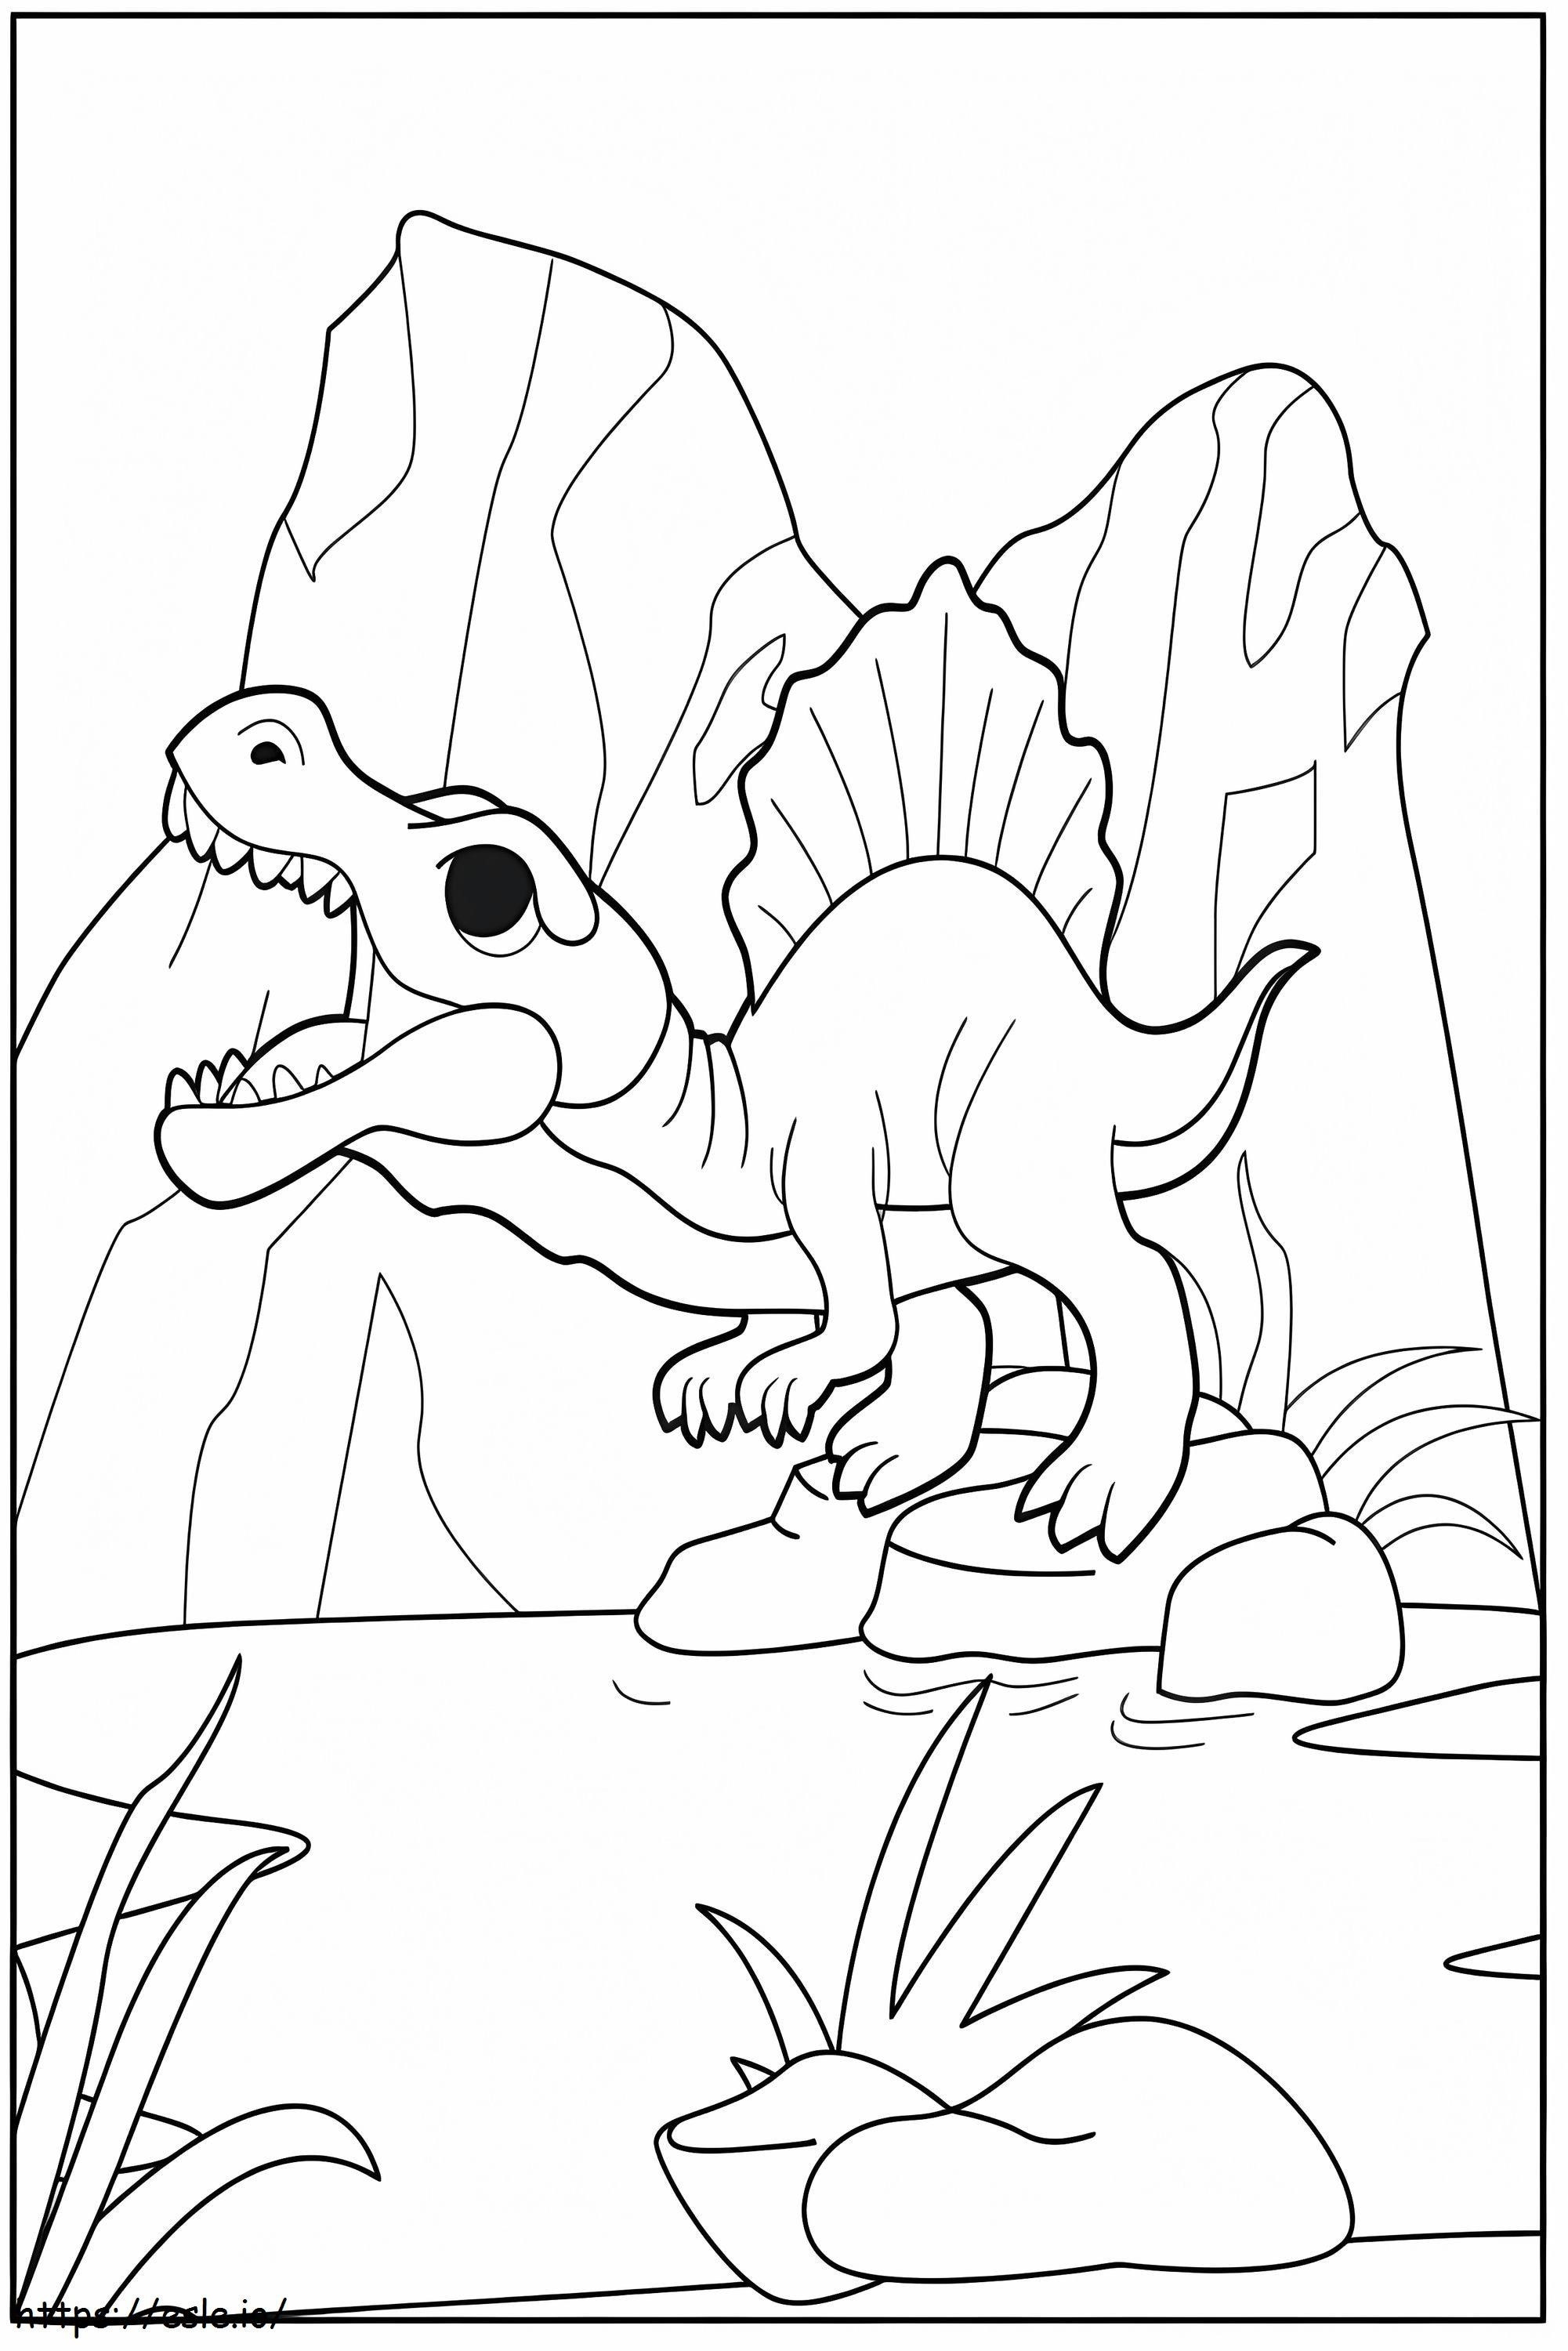 Adorable Spinosaurus coloring page